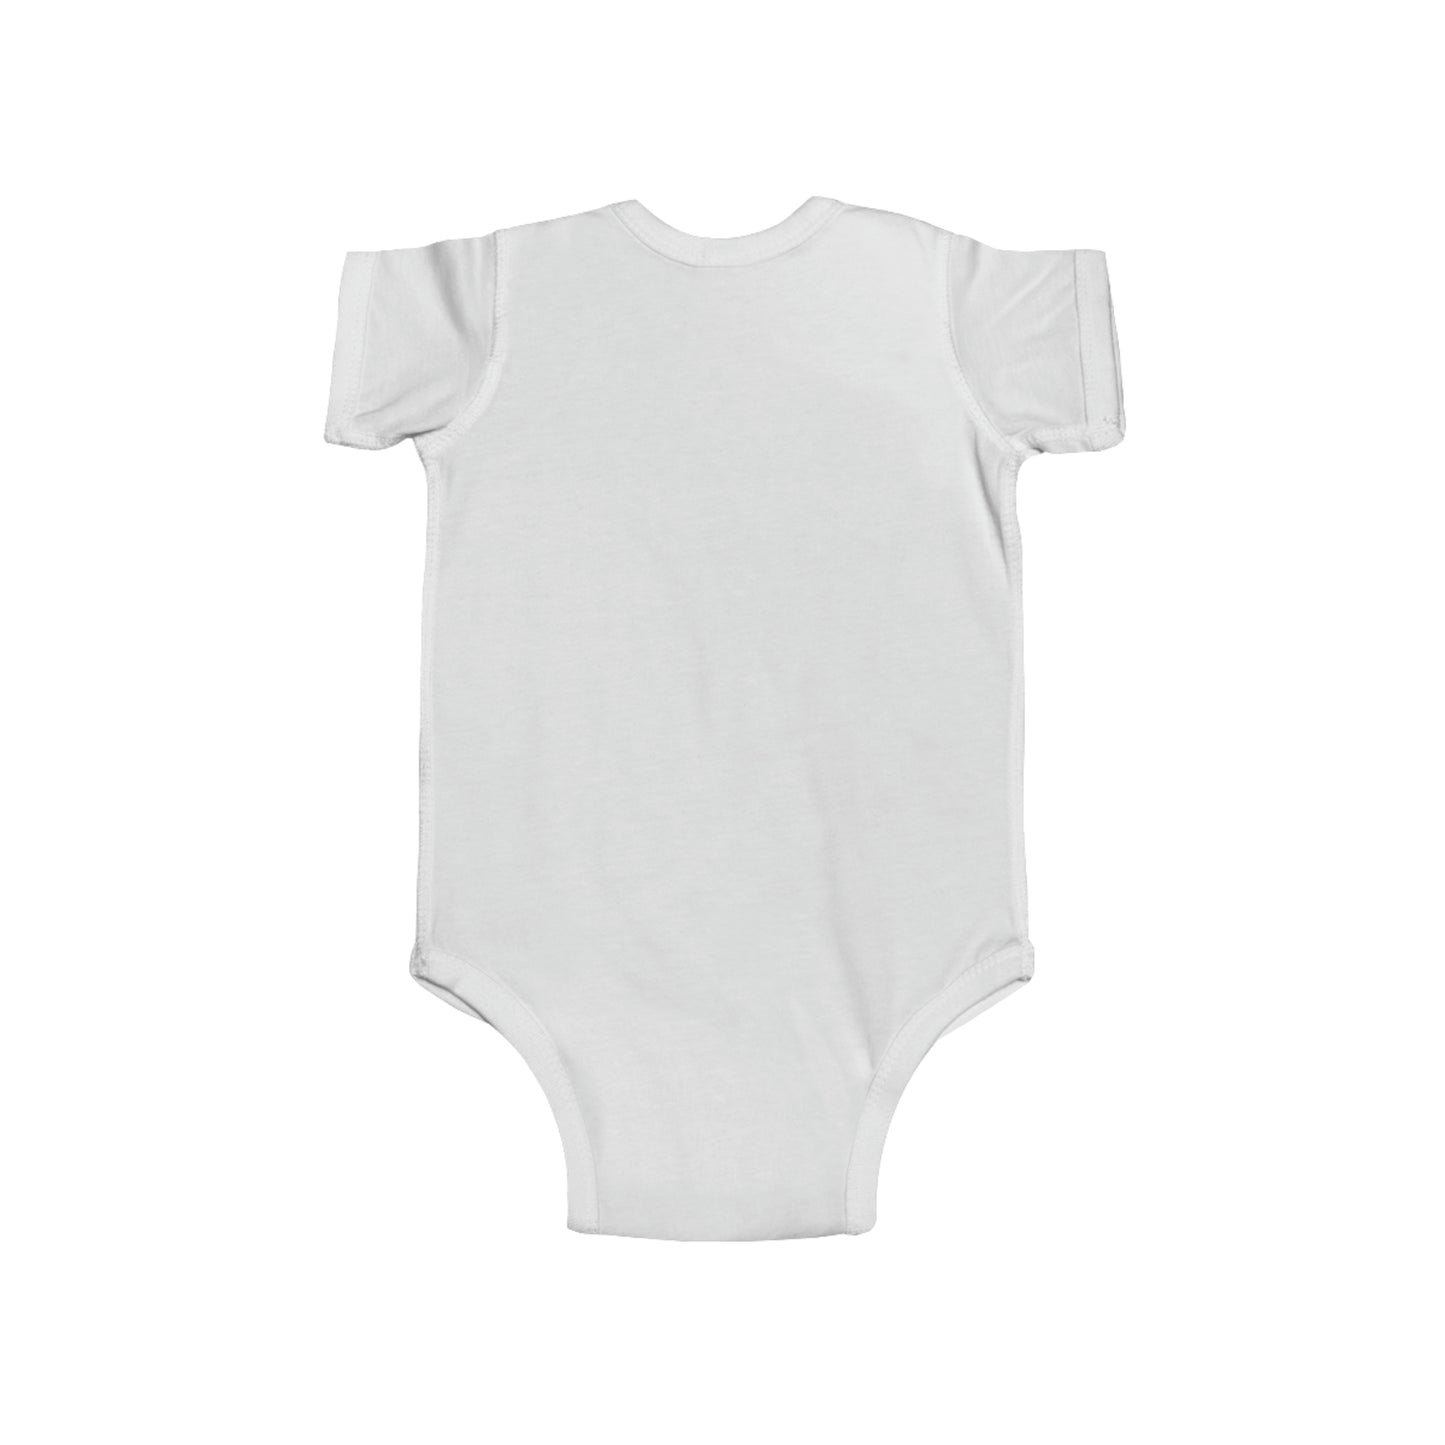 BLK GRL PWR Baby Bodysuit